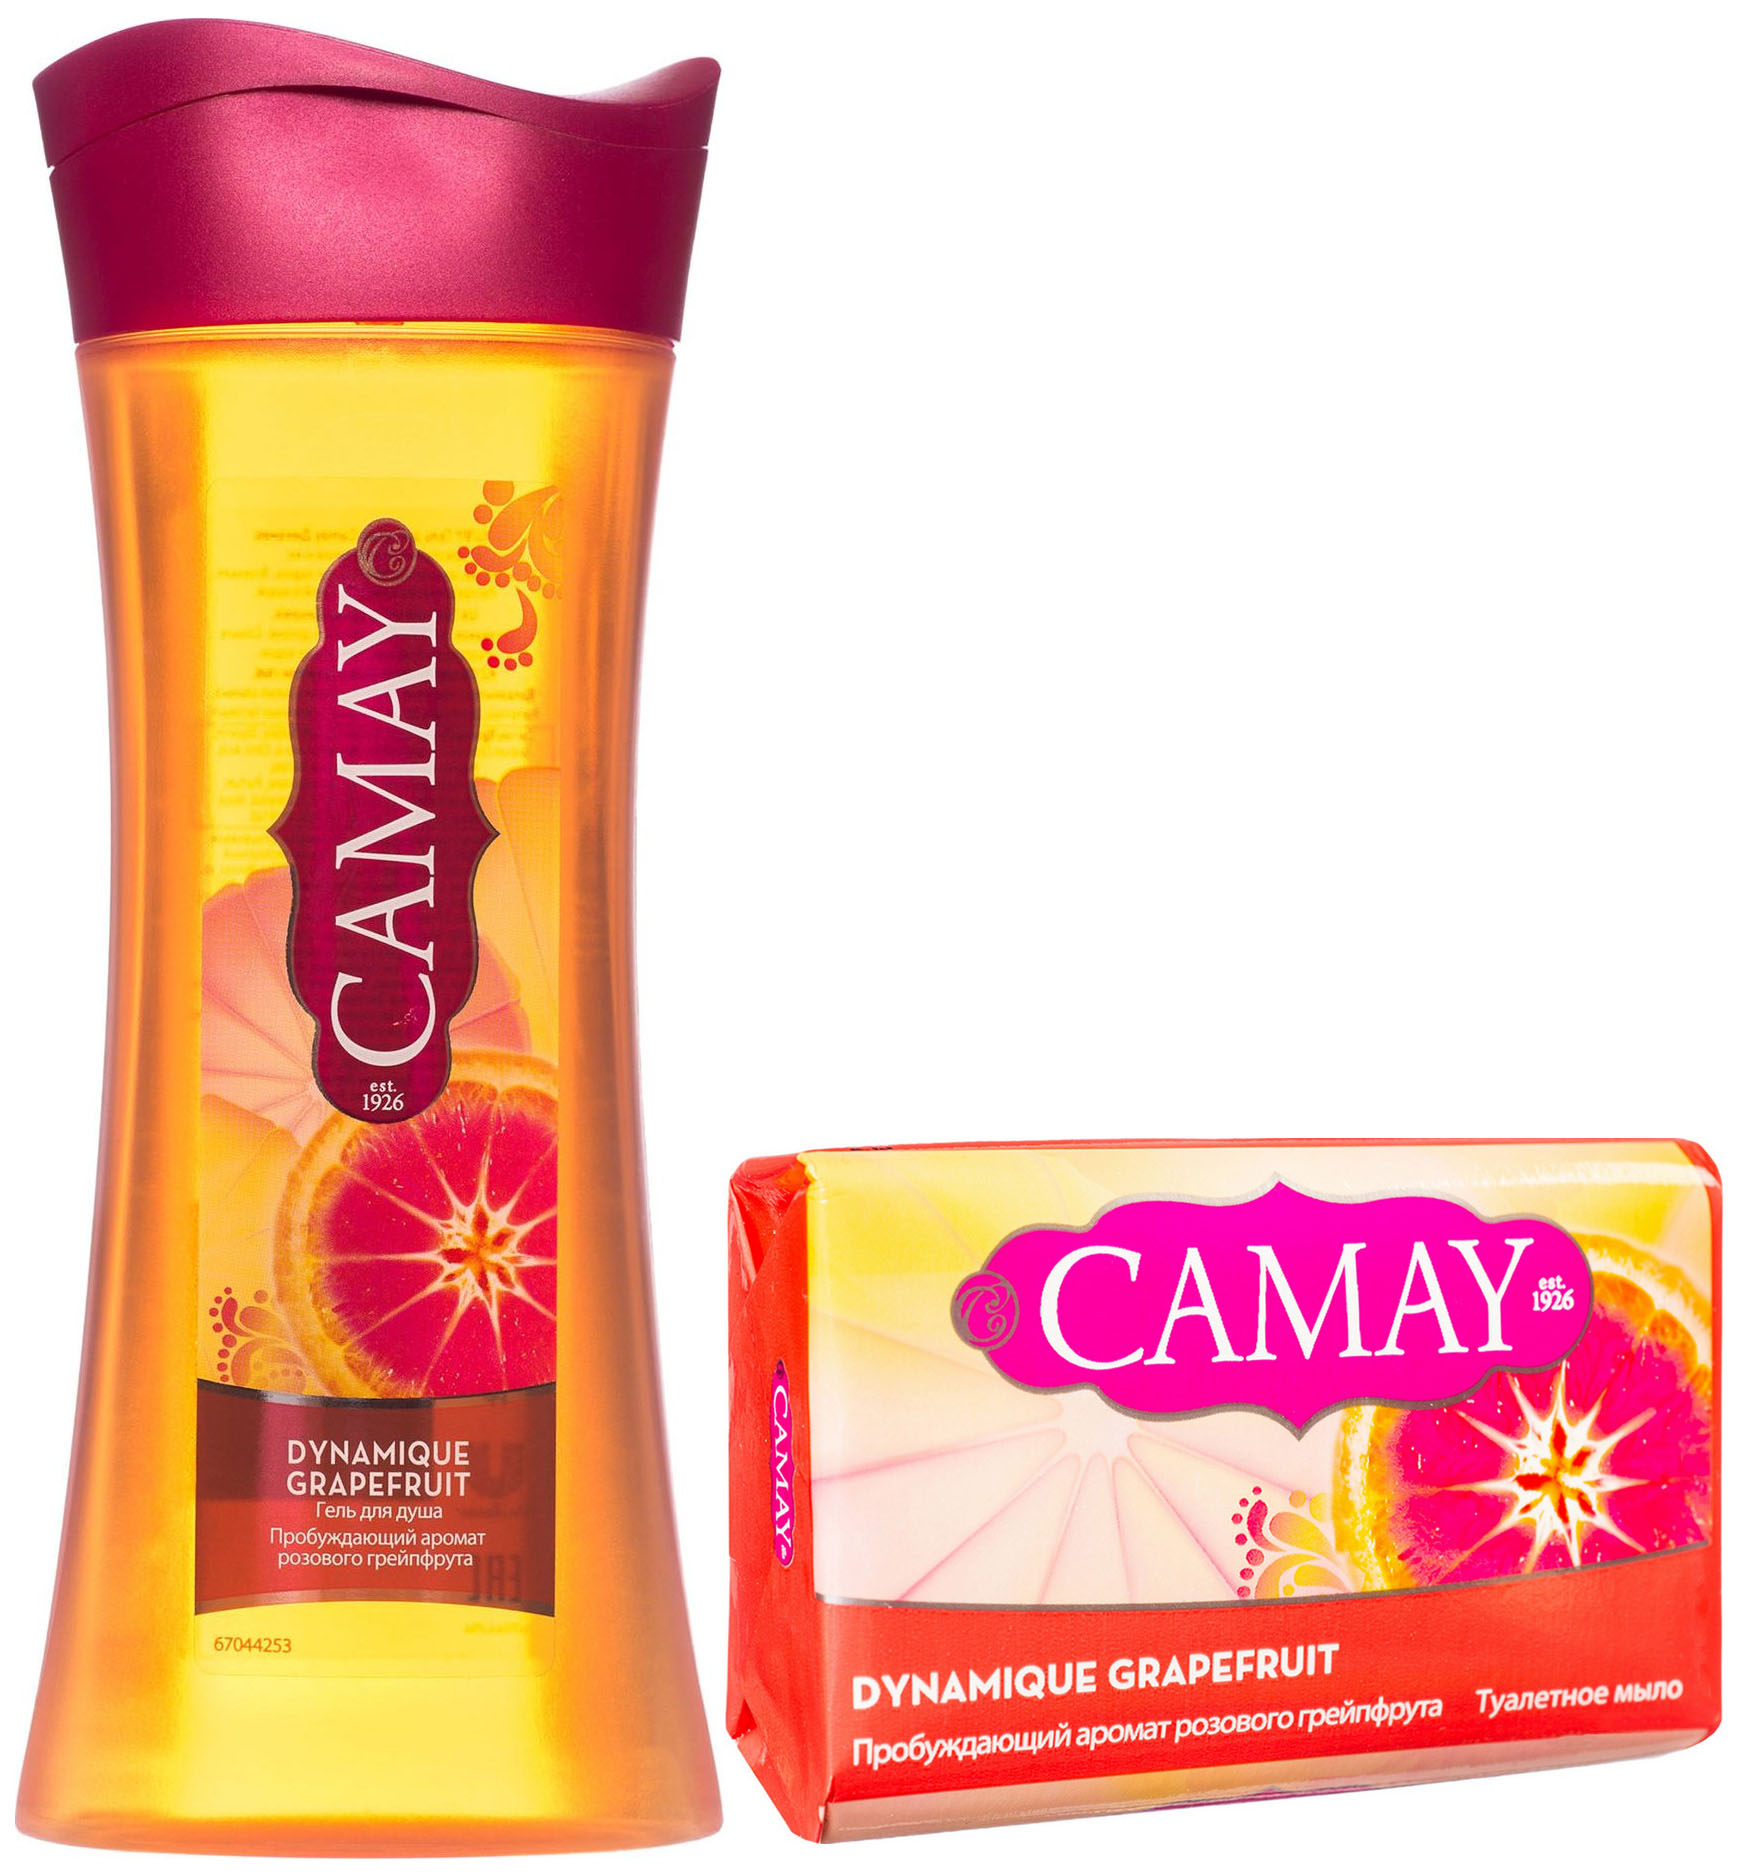 Гель для душа Camay Dynamique Grapefruit 250 мл + Мыло Camay Dynamique Grapefruit 85 г туалетное мыло camay ы ганата botanicals 85г х 2шт